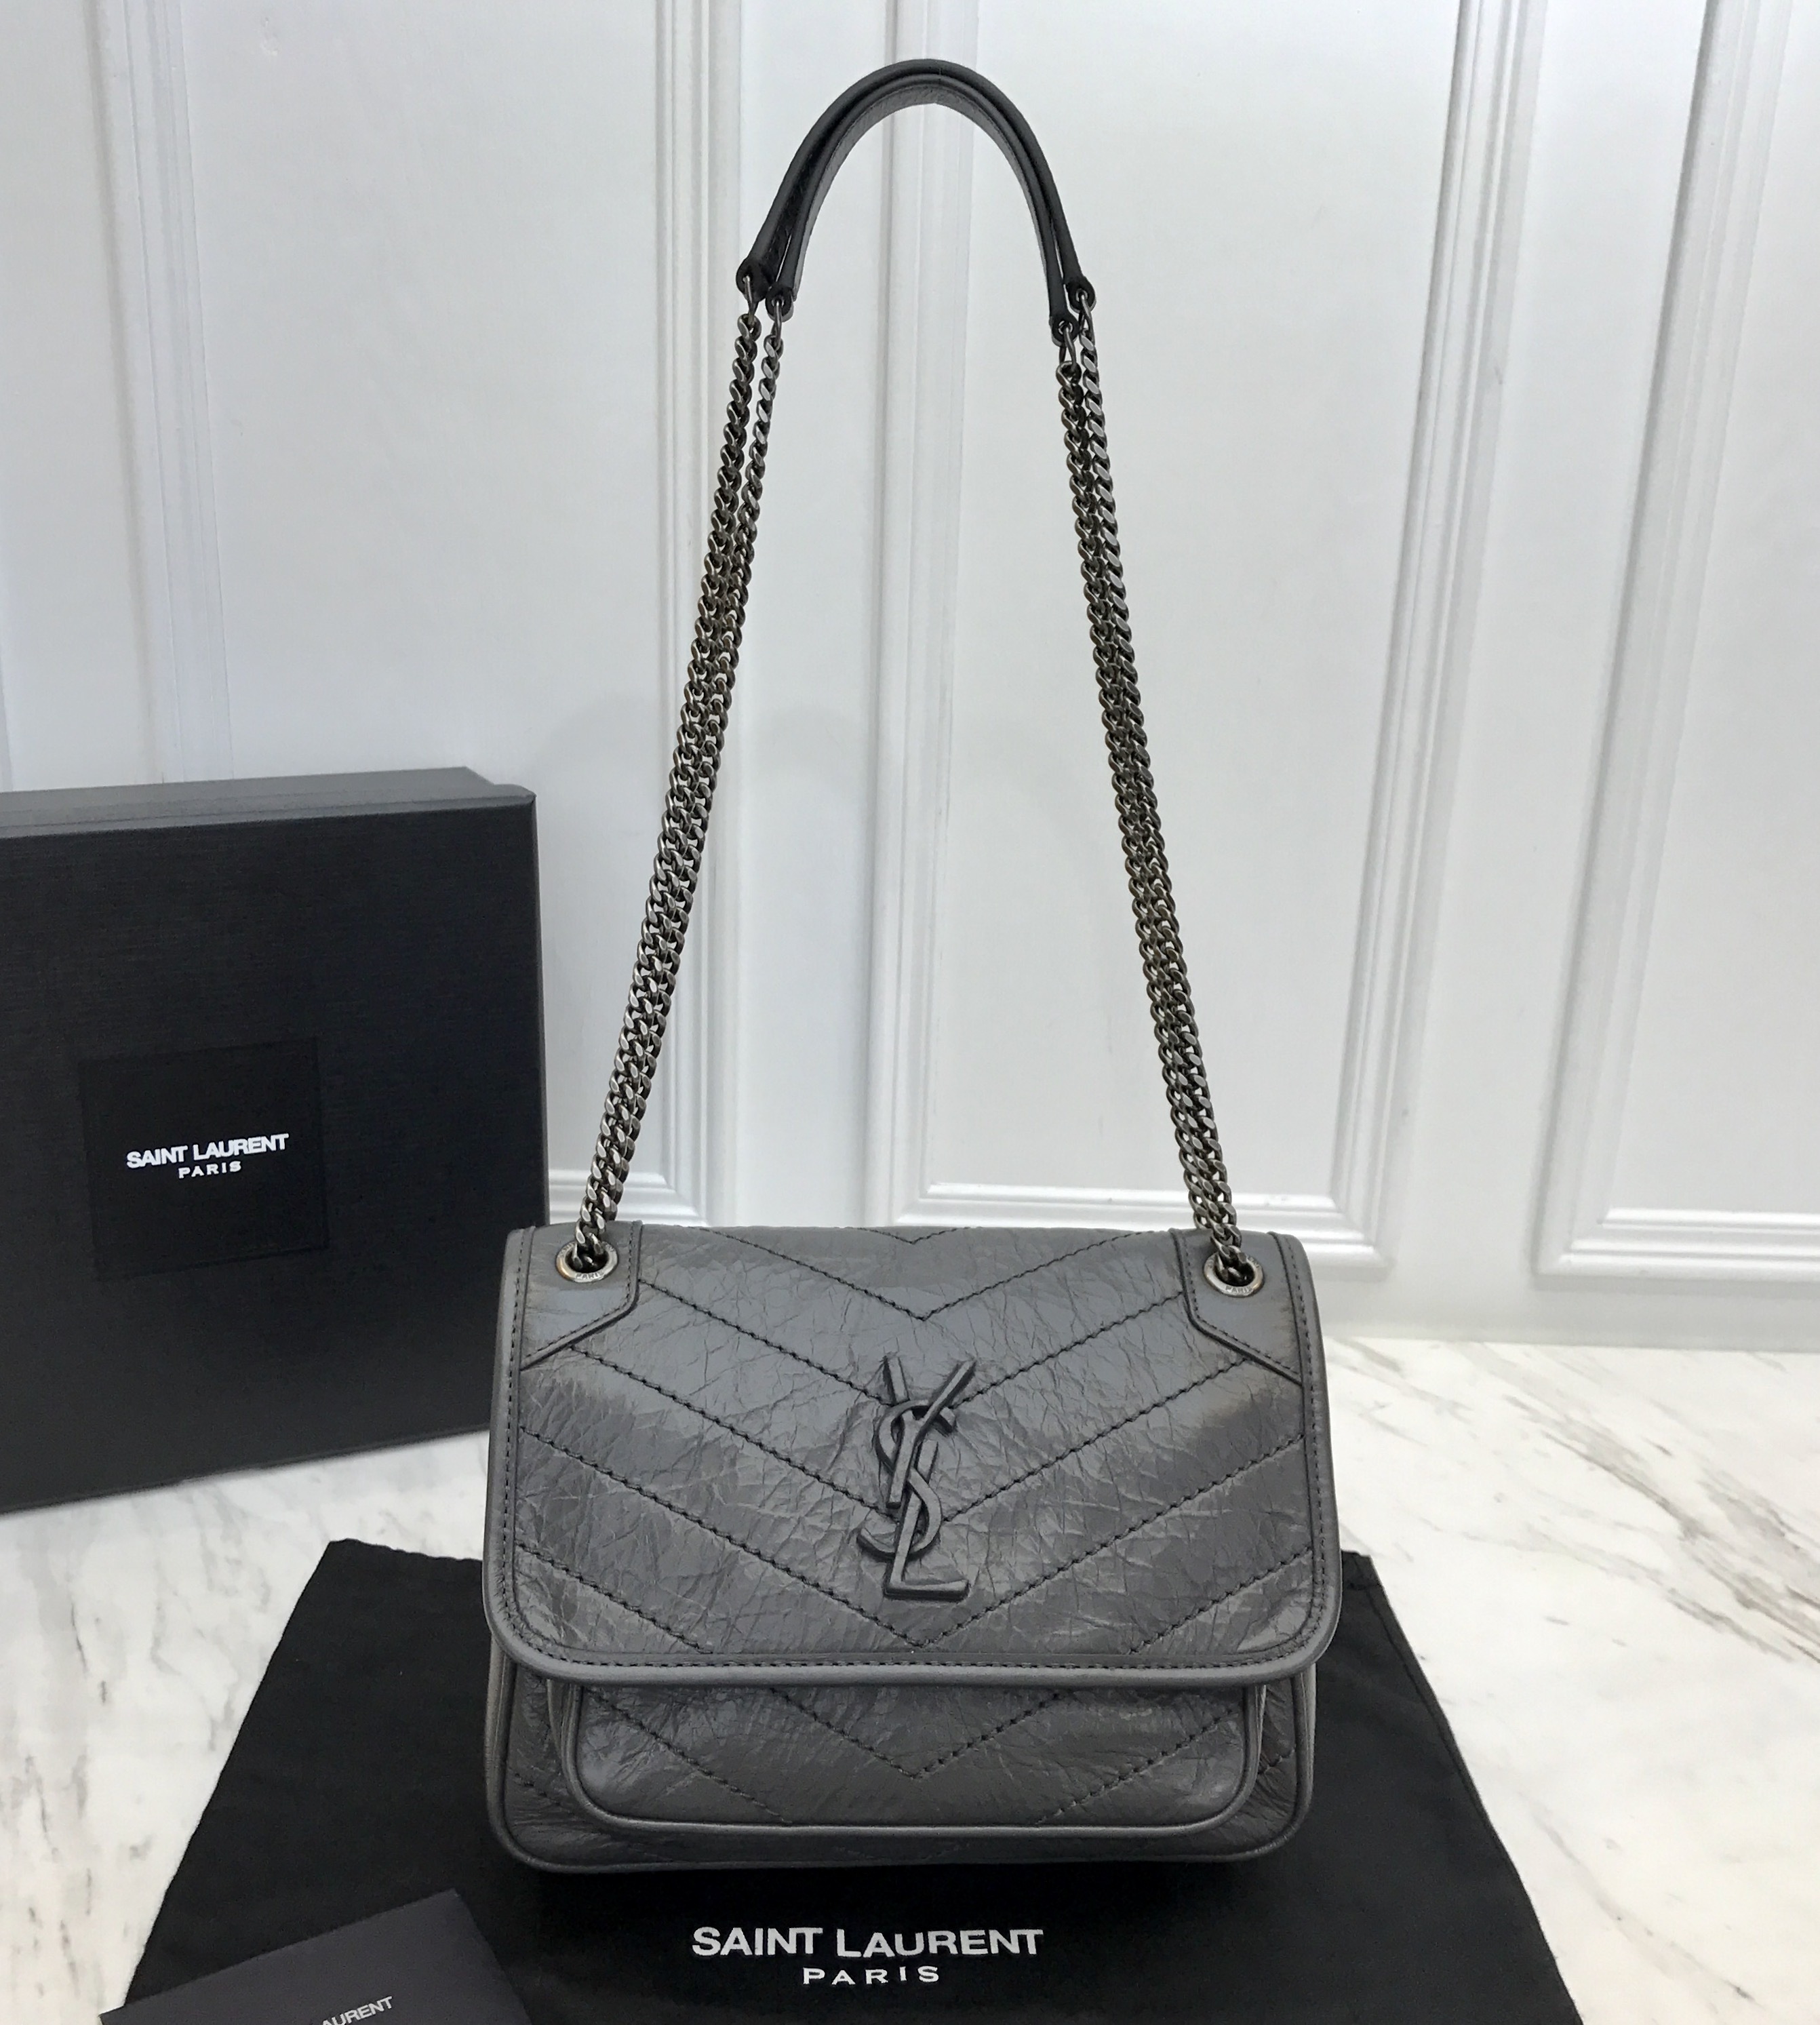 SYL Niki Bags Y Yves Saint Laurent Ysl Bags St Laurent Monogram Bag Ysl Shop Sale Handbags Outlet Online 1540092418402 0 